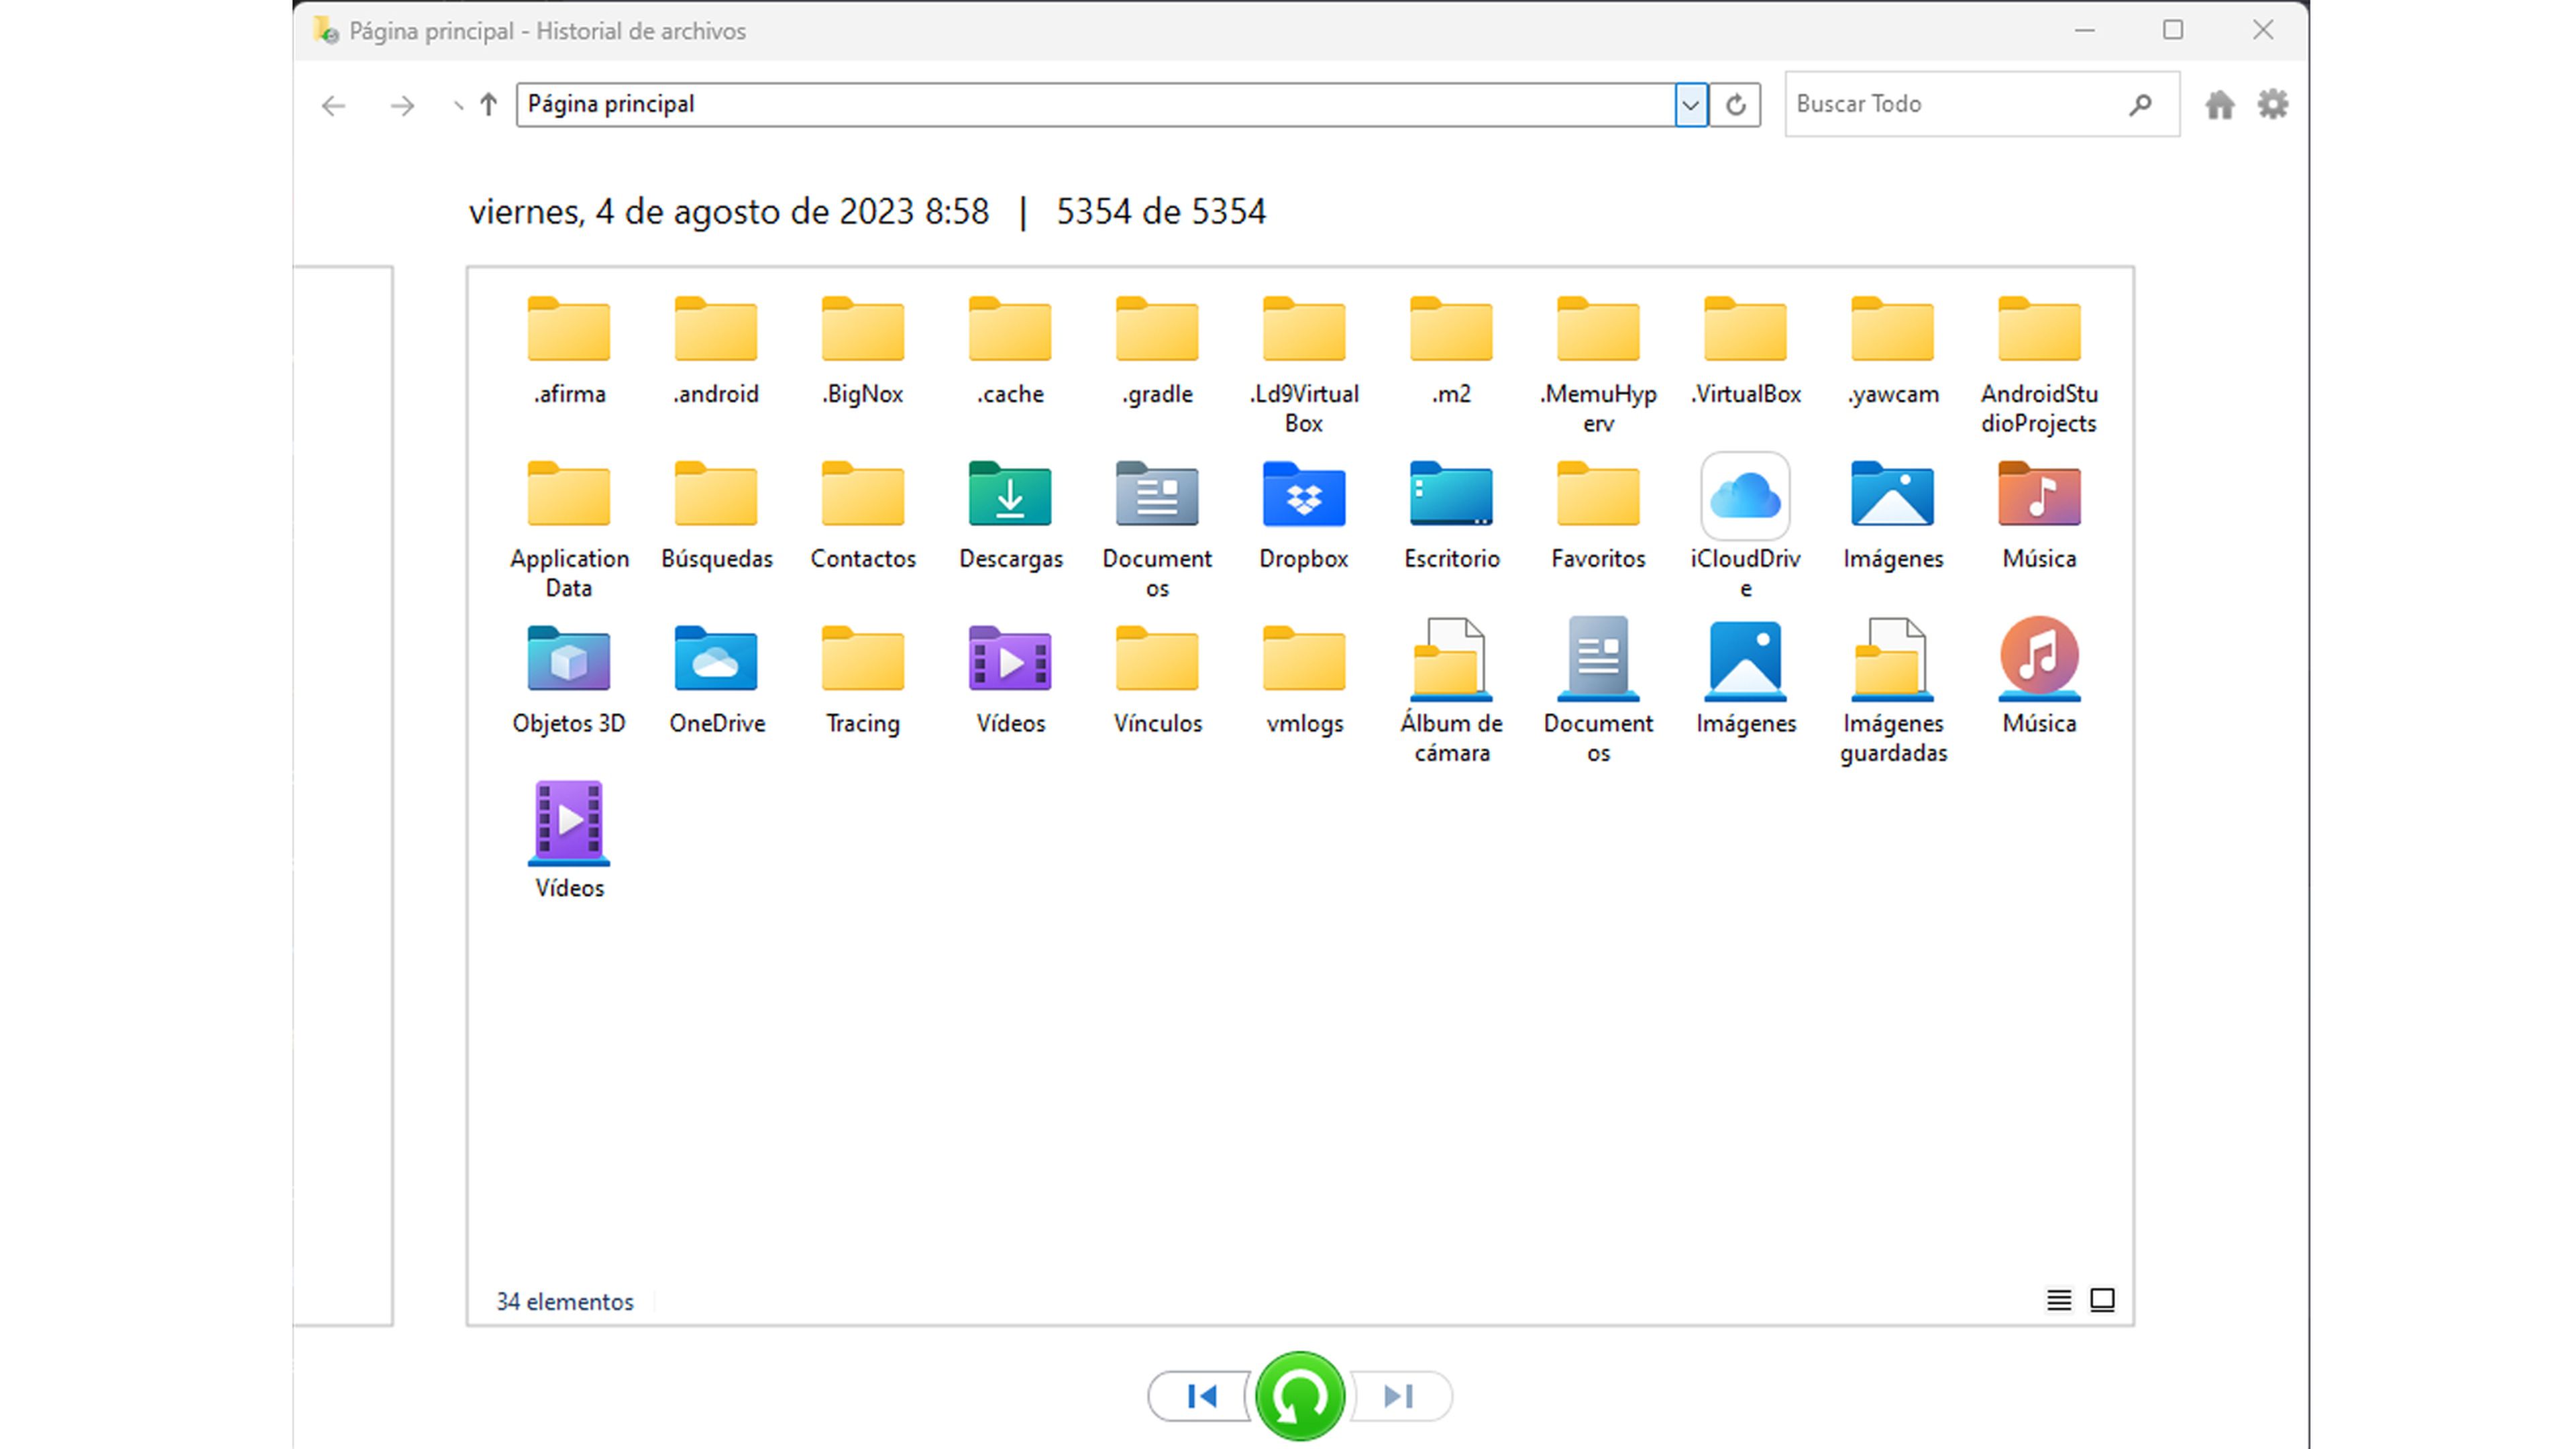 File history in Windows 11